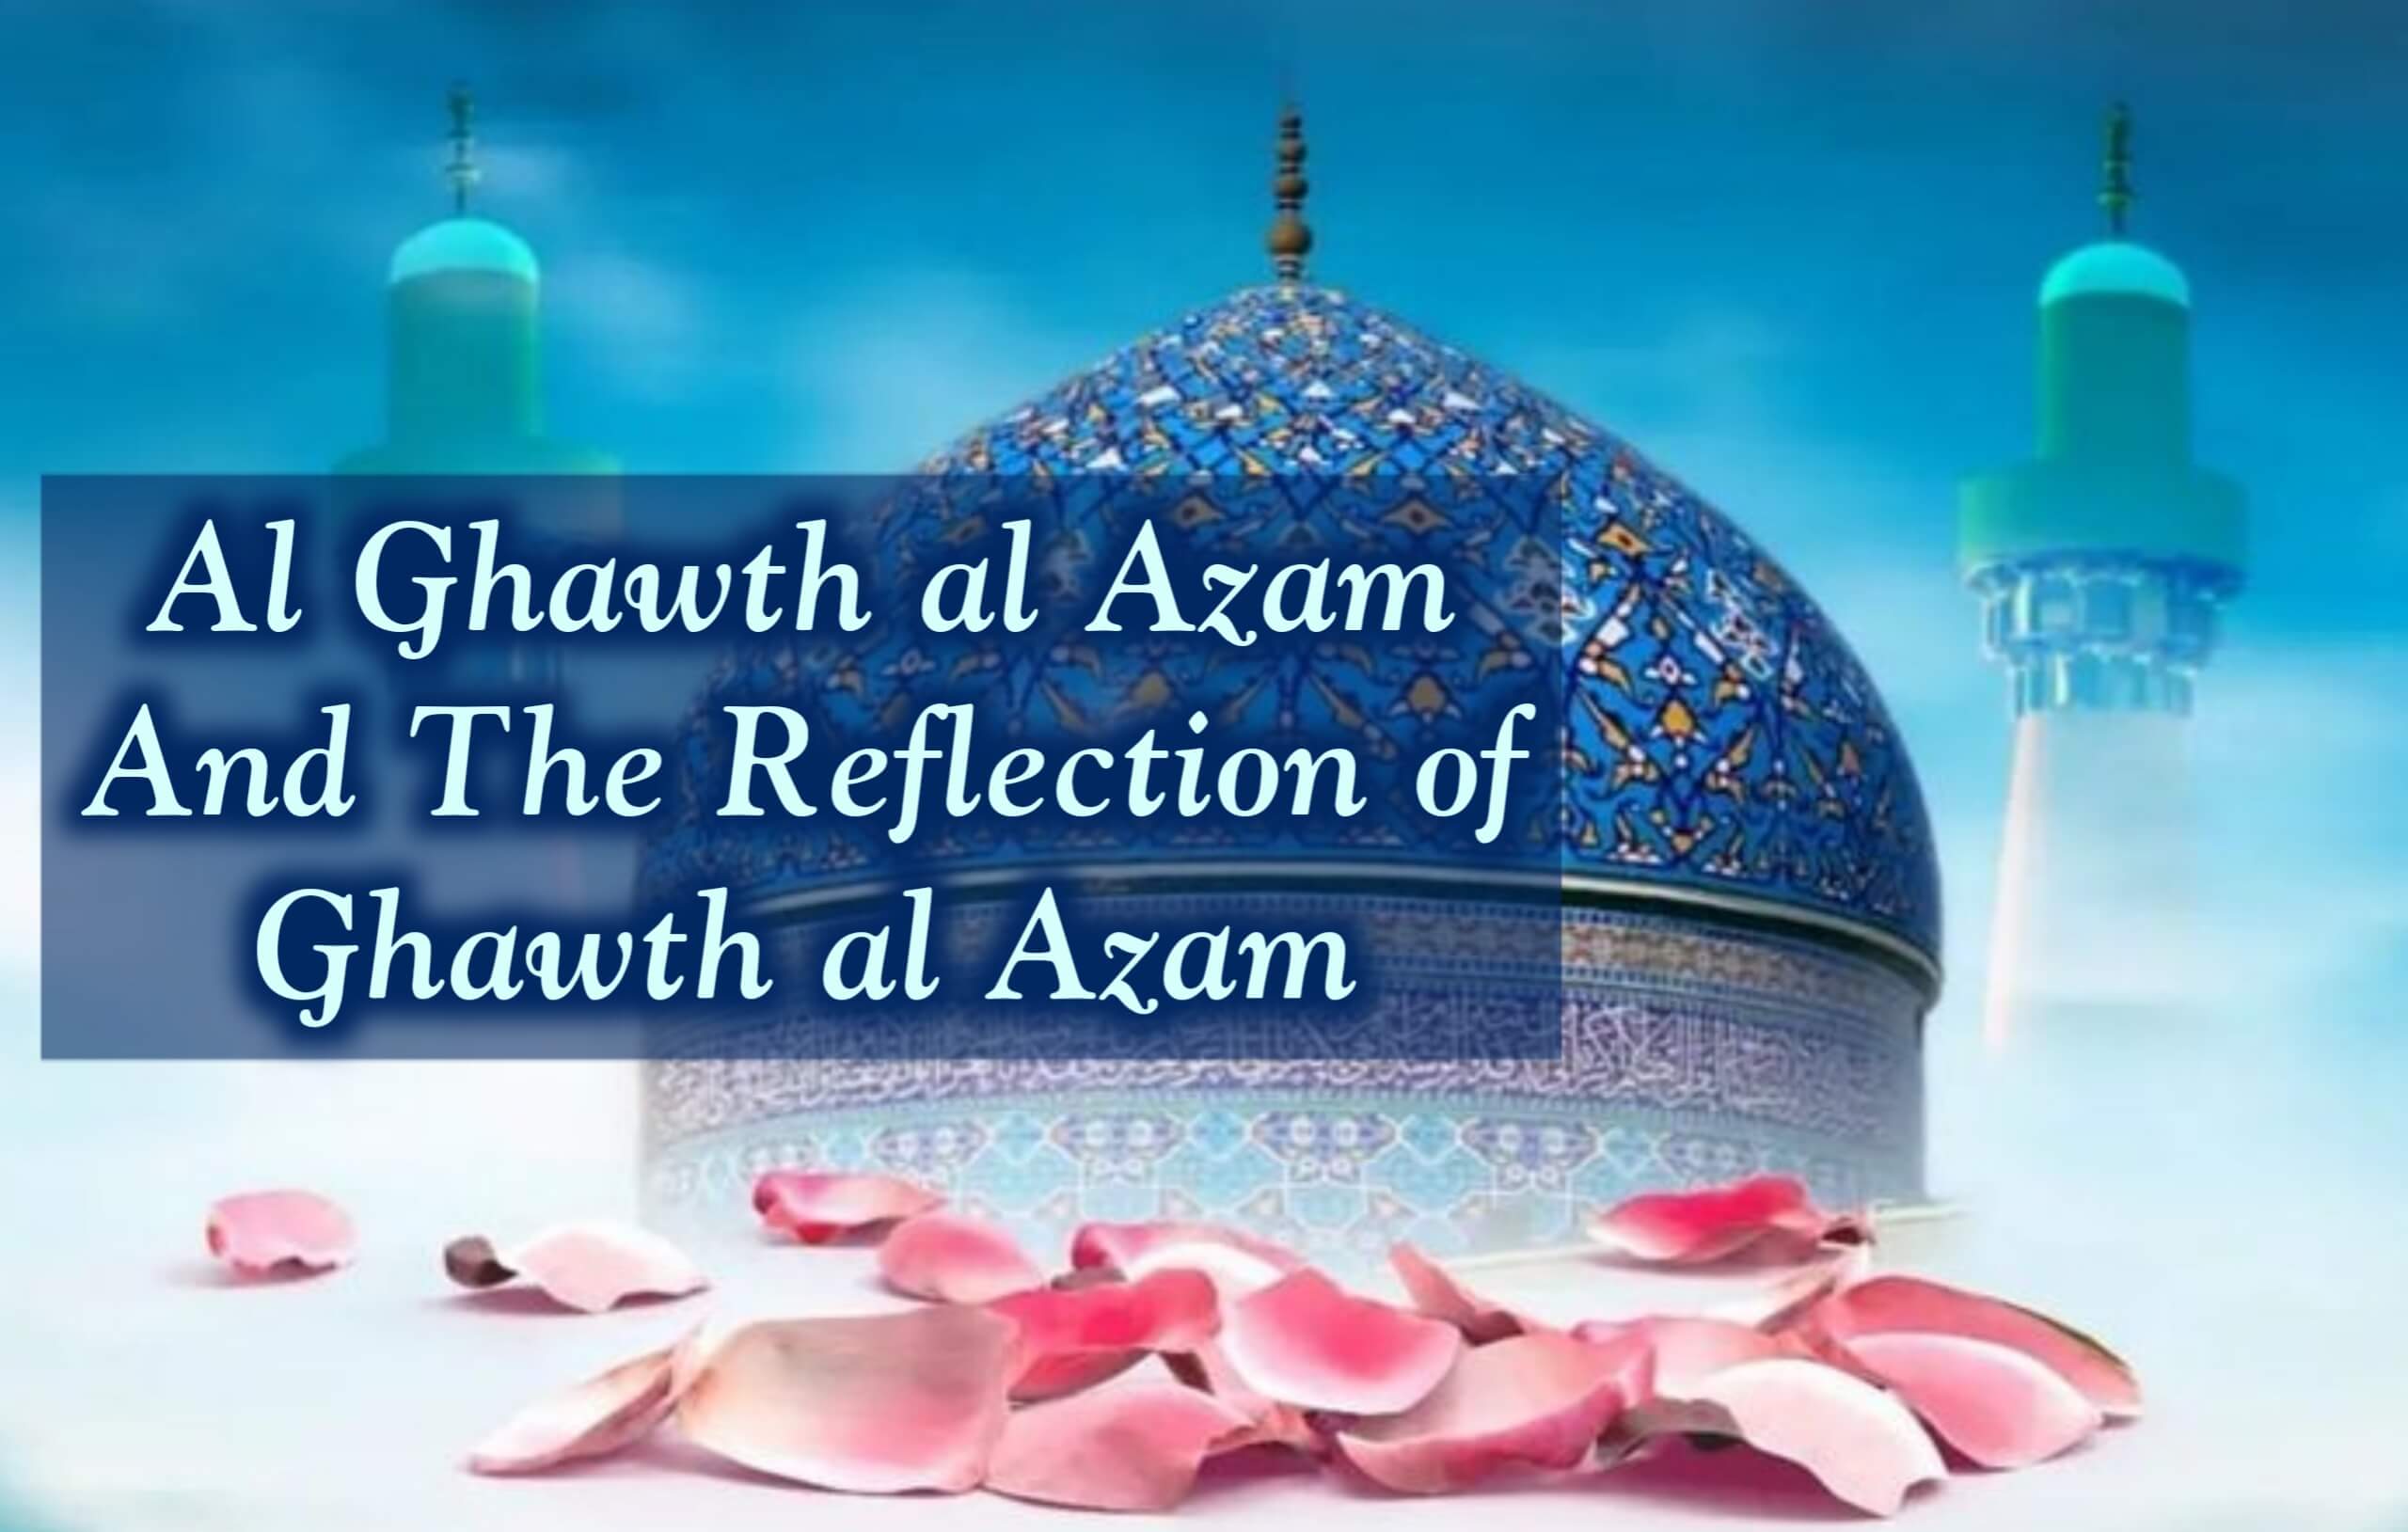 Ghawth al Azam